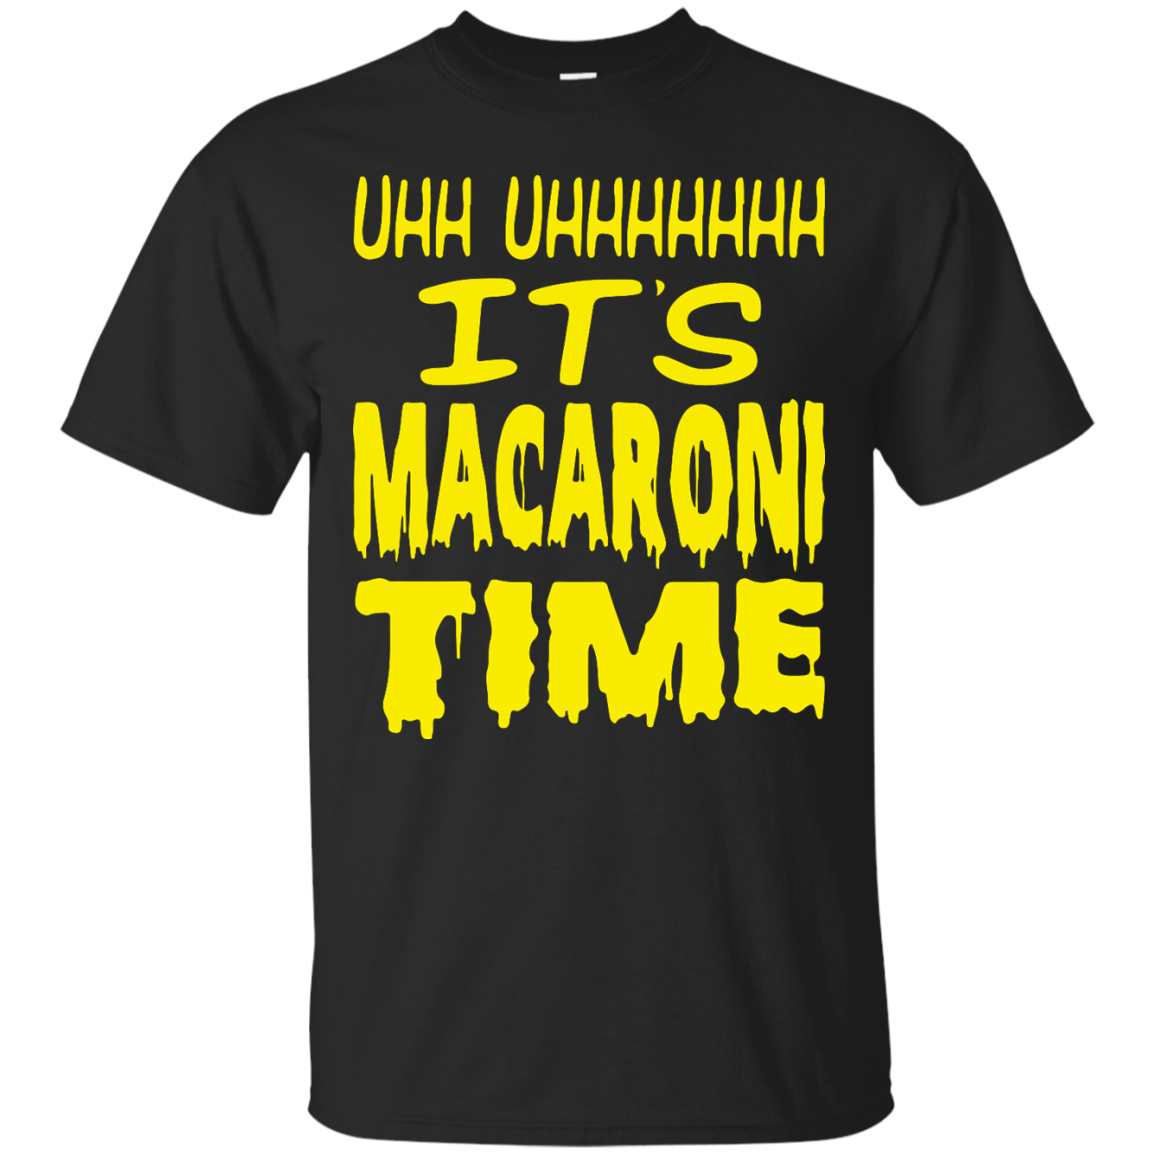 UHH UHHHHHHH It's Macaroni Time shirt, hoodie, long sleeve